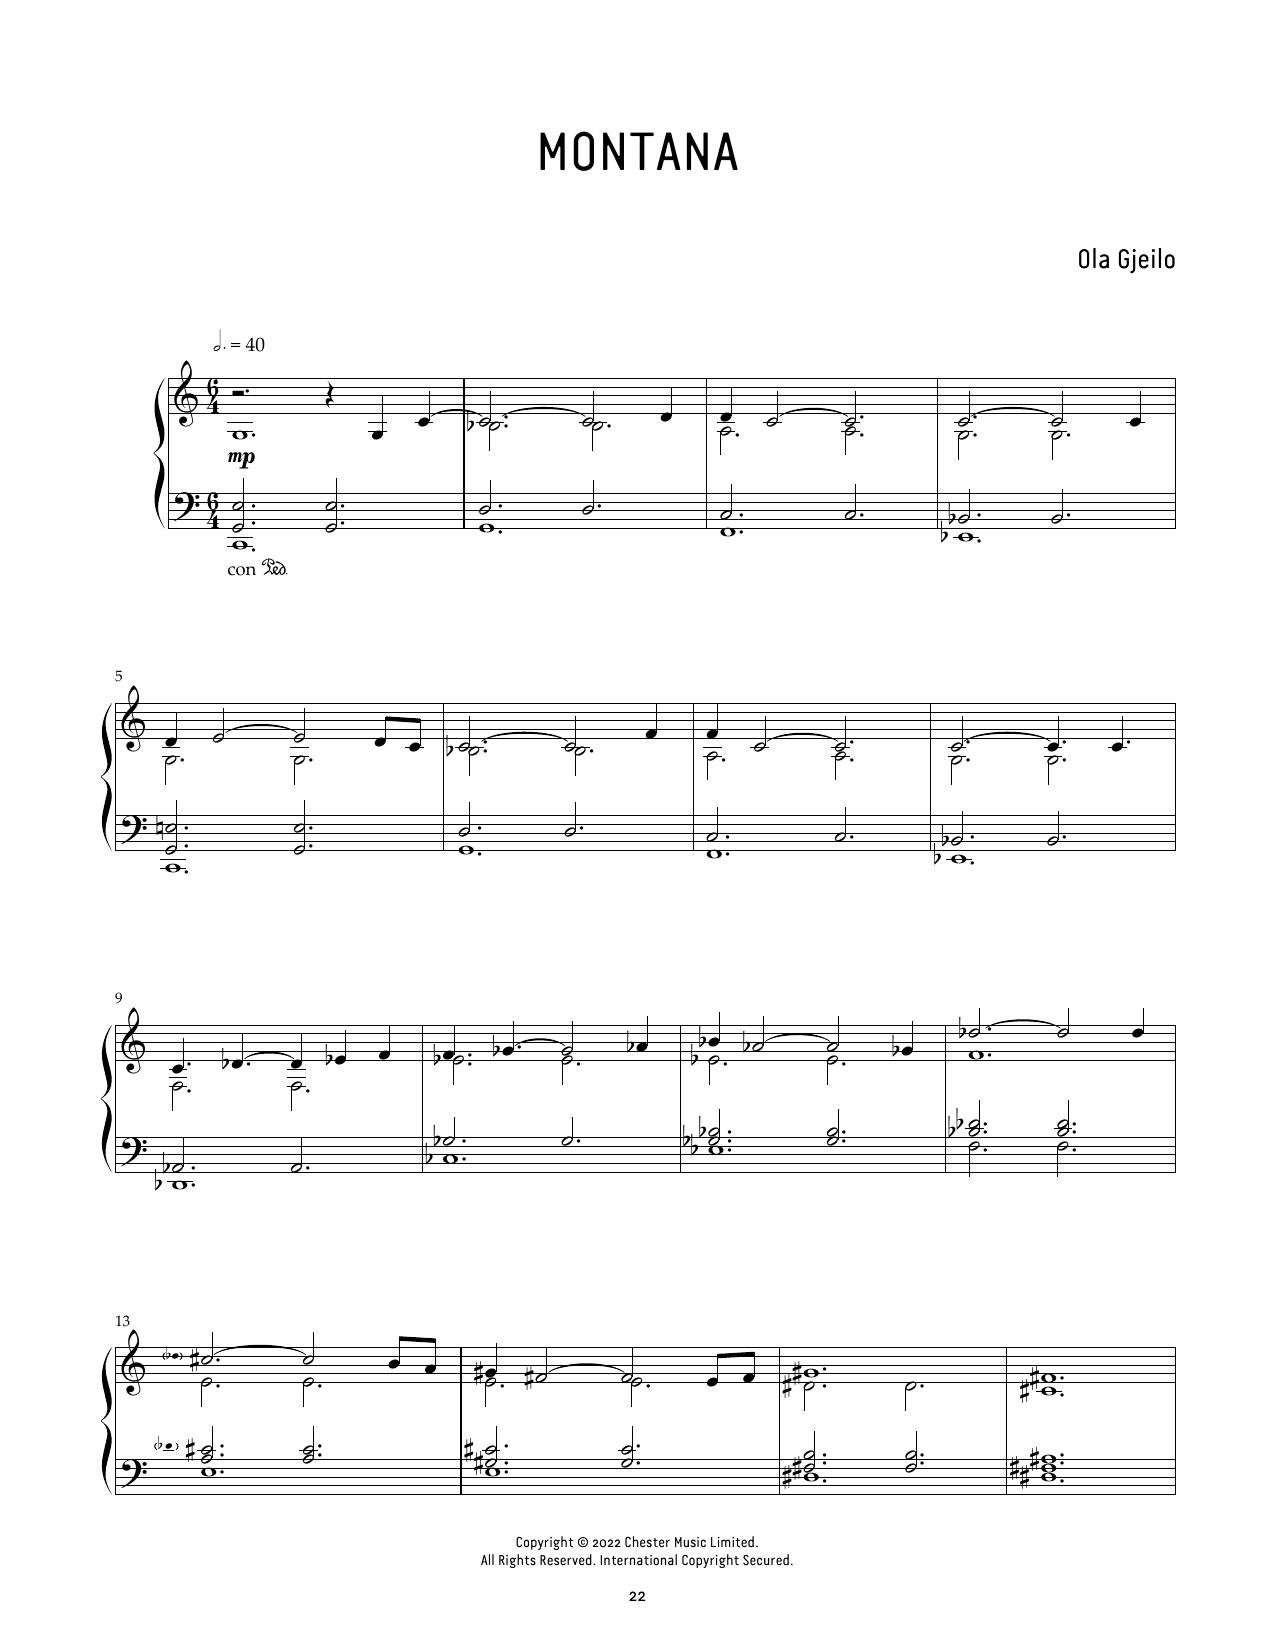 Ola Gjeilo Montana Sheet Music Notes & Chords for Piano Solo - Download or Print PDF